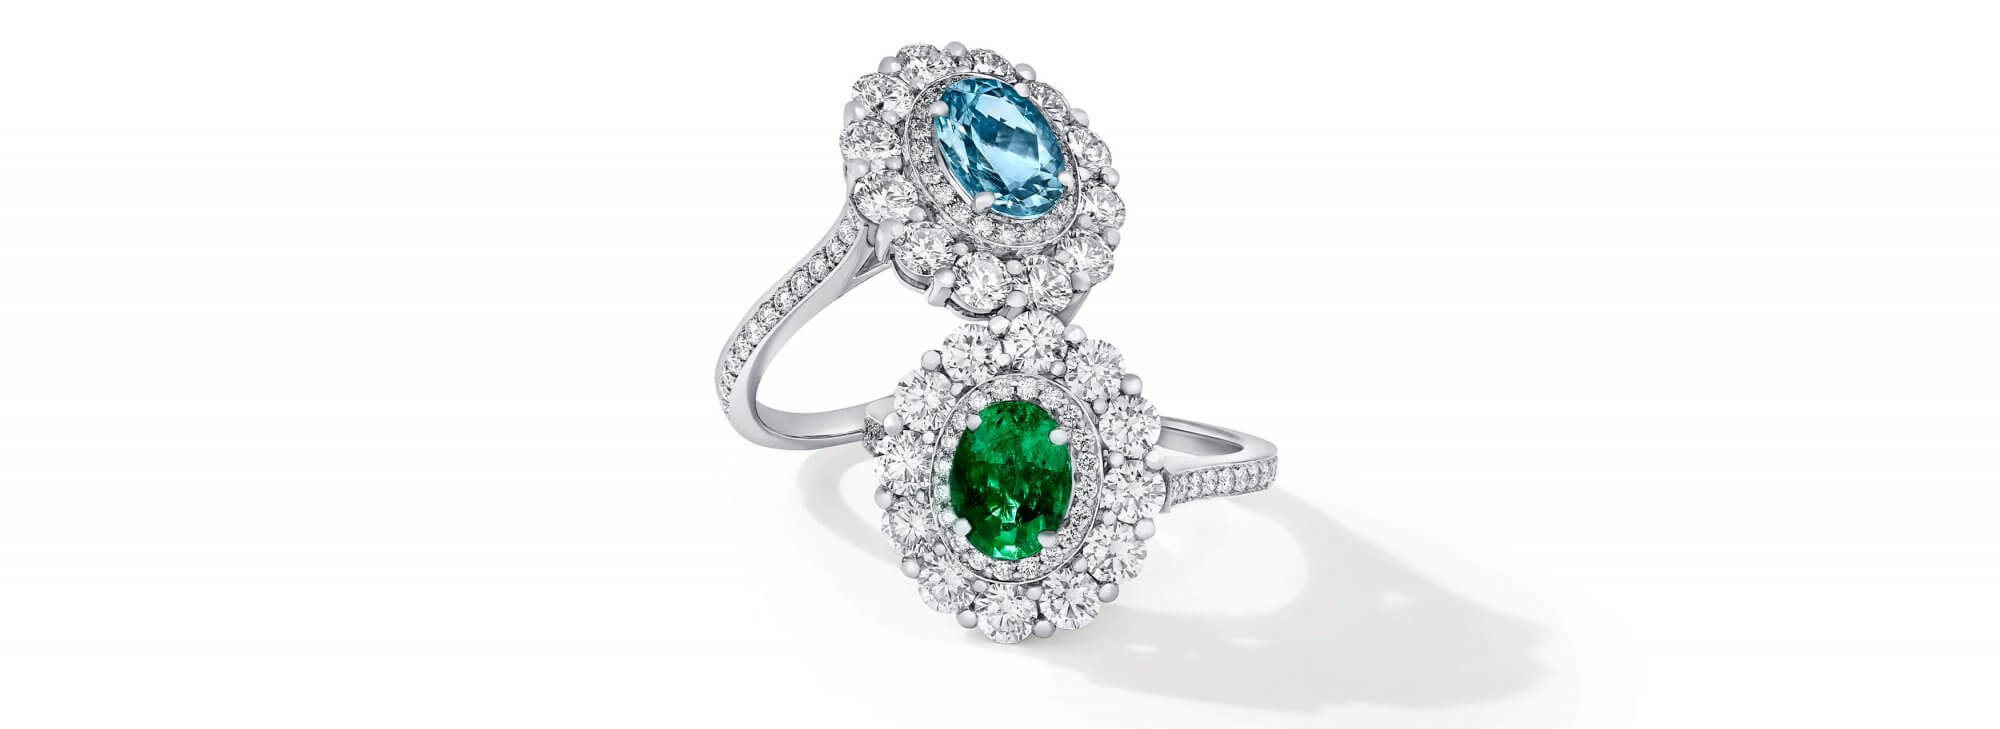 Gemstone & Diamonds Engagement Rings | Garrard